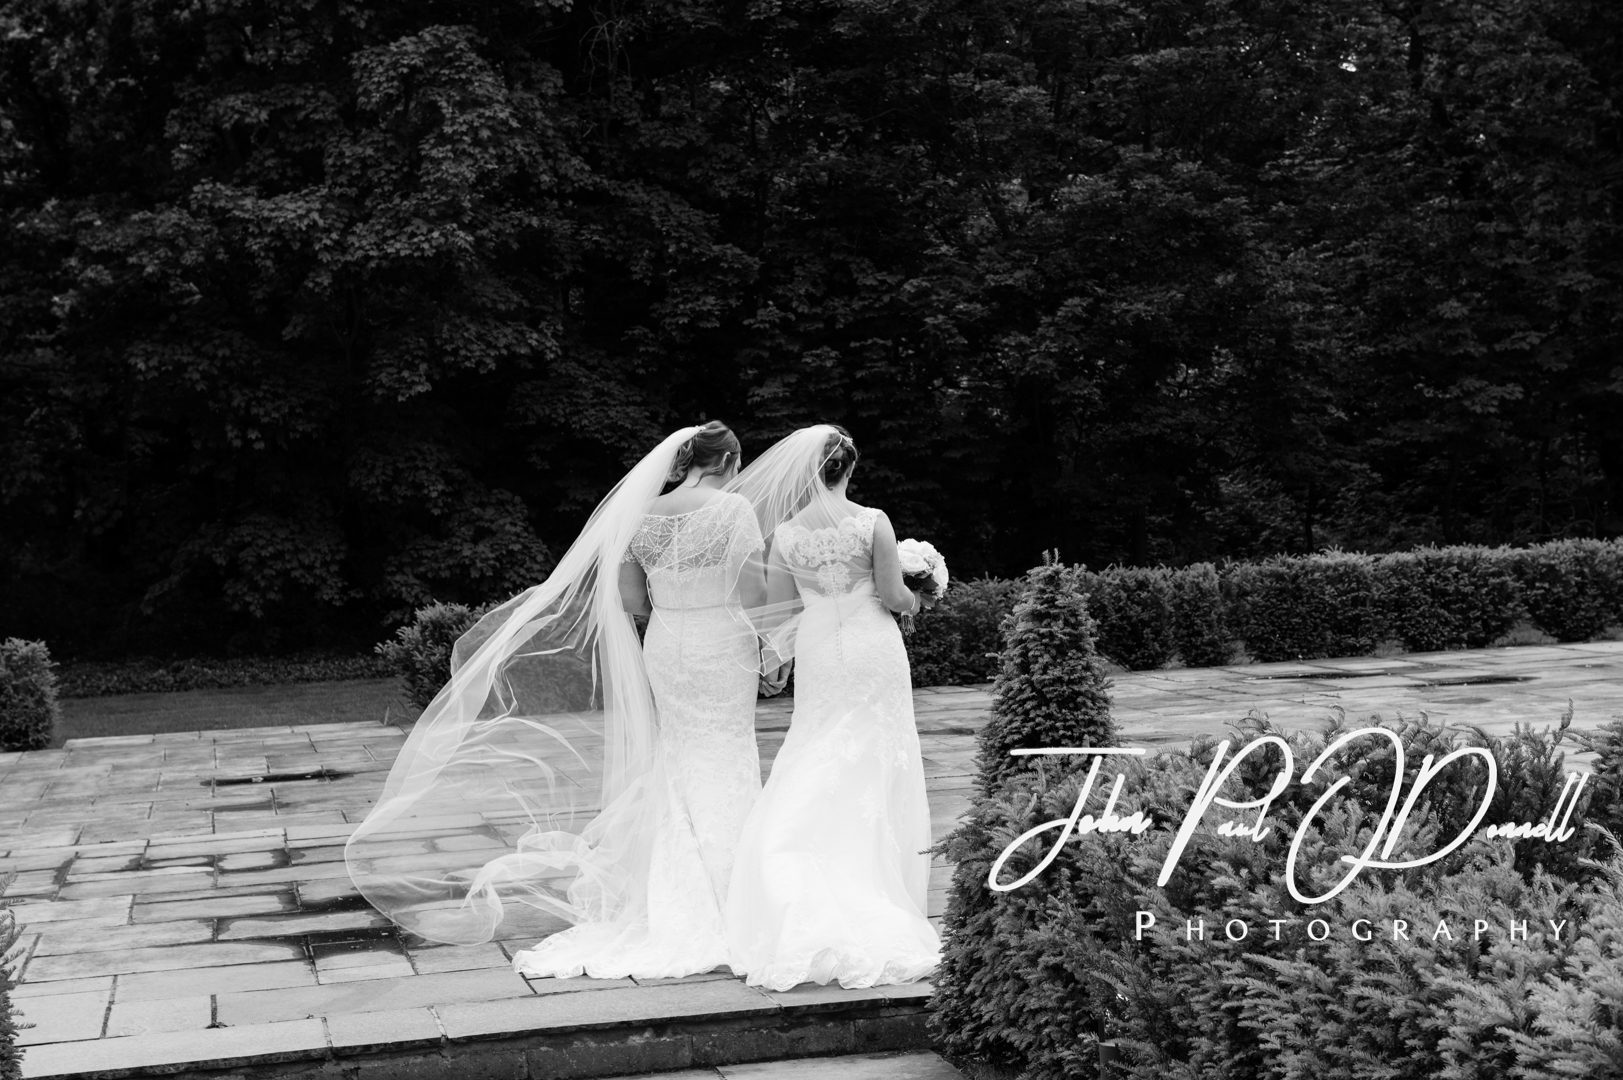 Danielle and Rebeccas wedding at Swynford Manor